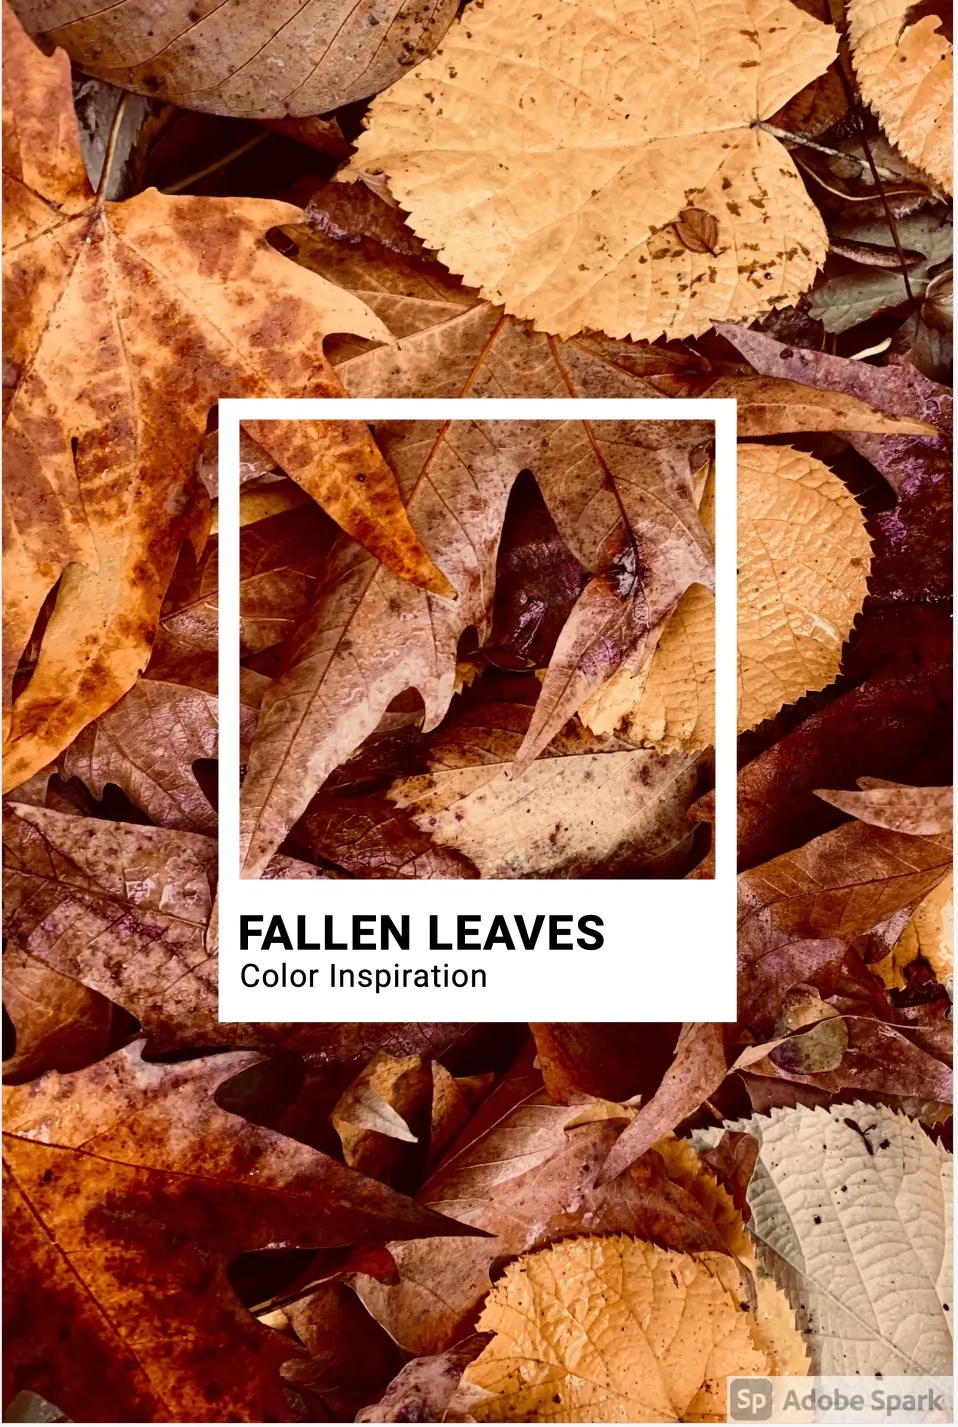 Content creator: Fallen leaves